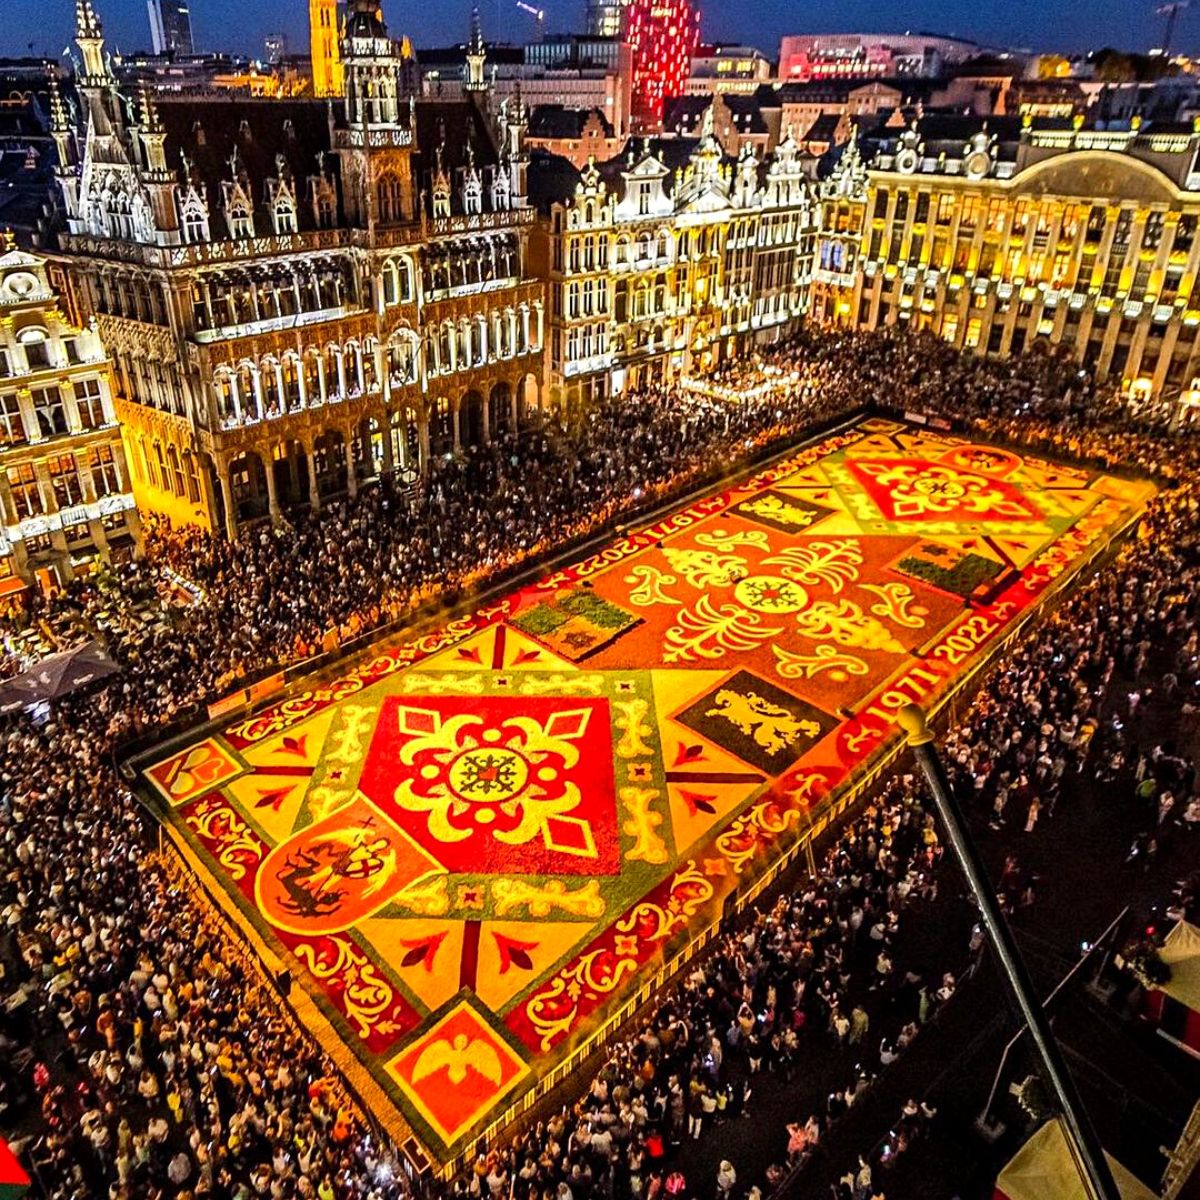 Flower Carpet Brussels 2022 Featured on Thursd